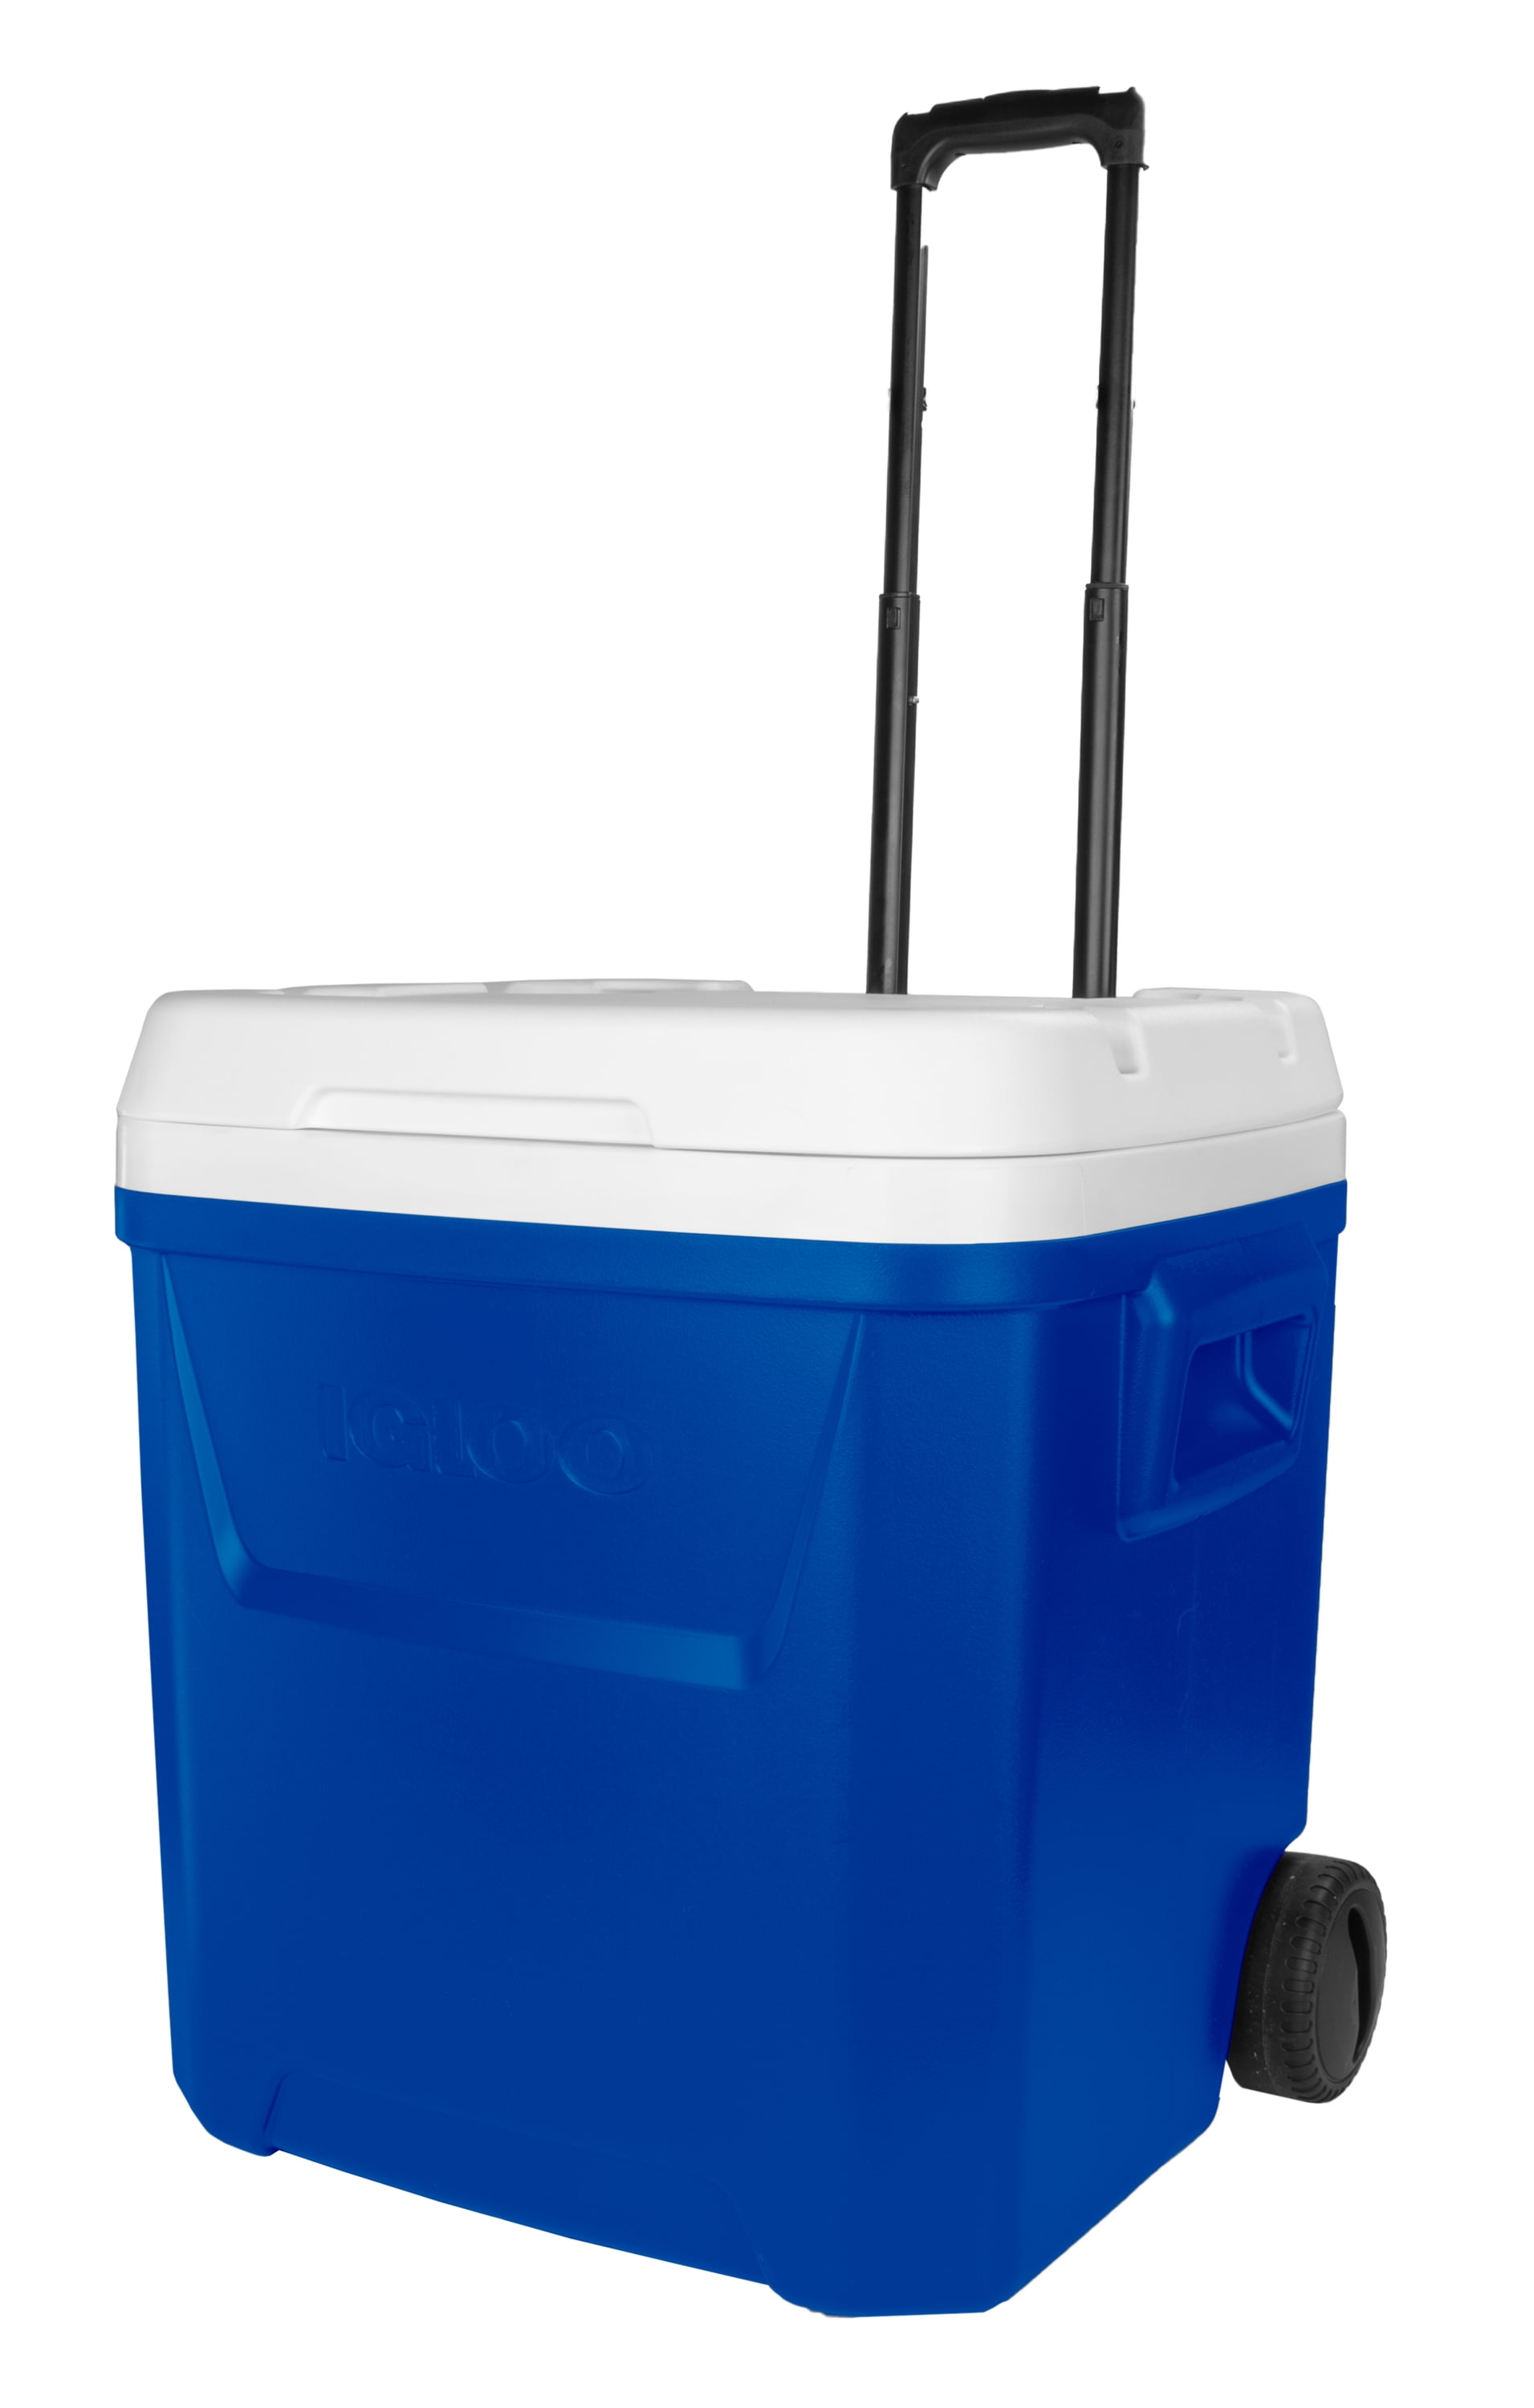 Igloo 60 qt. Laguna Ice Chest Cooler with Wheels, Blue - 1